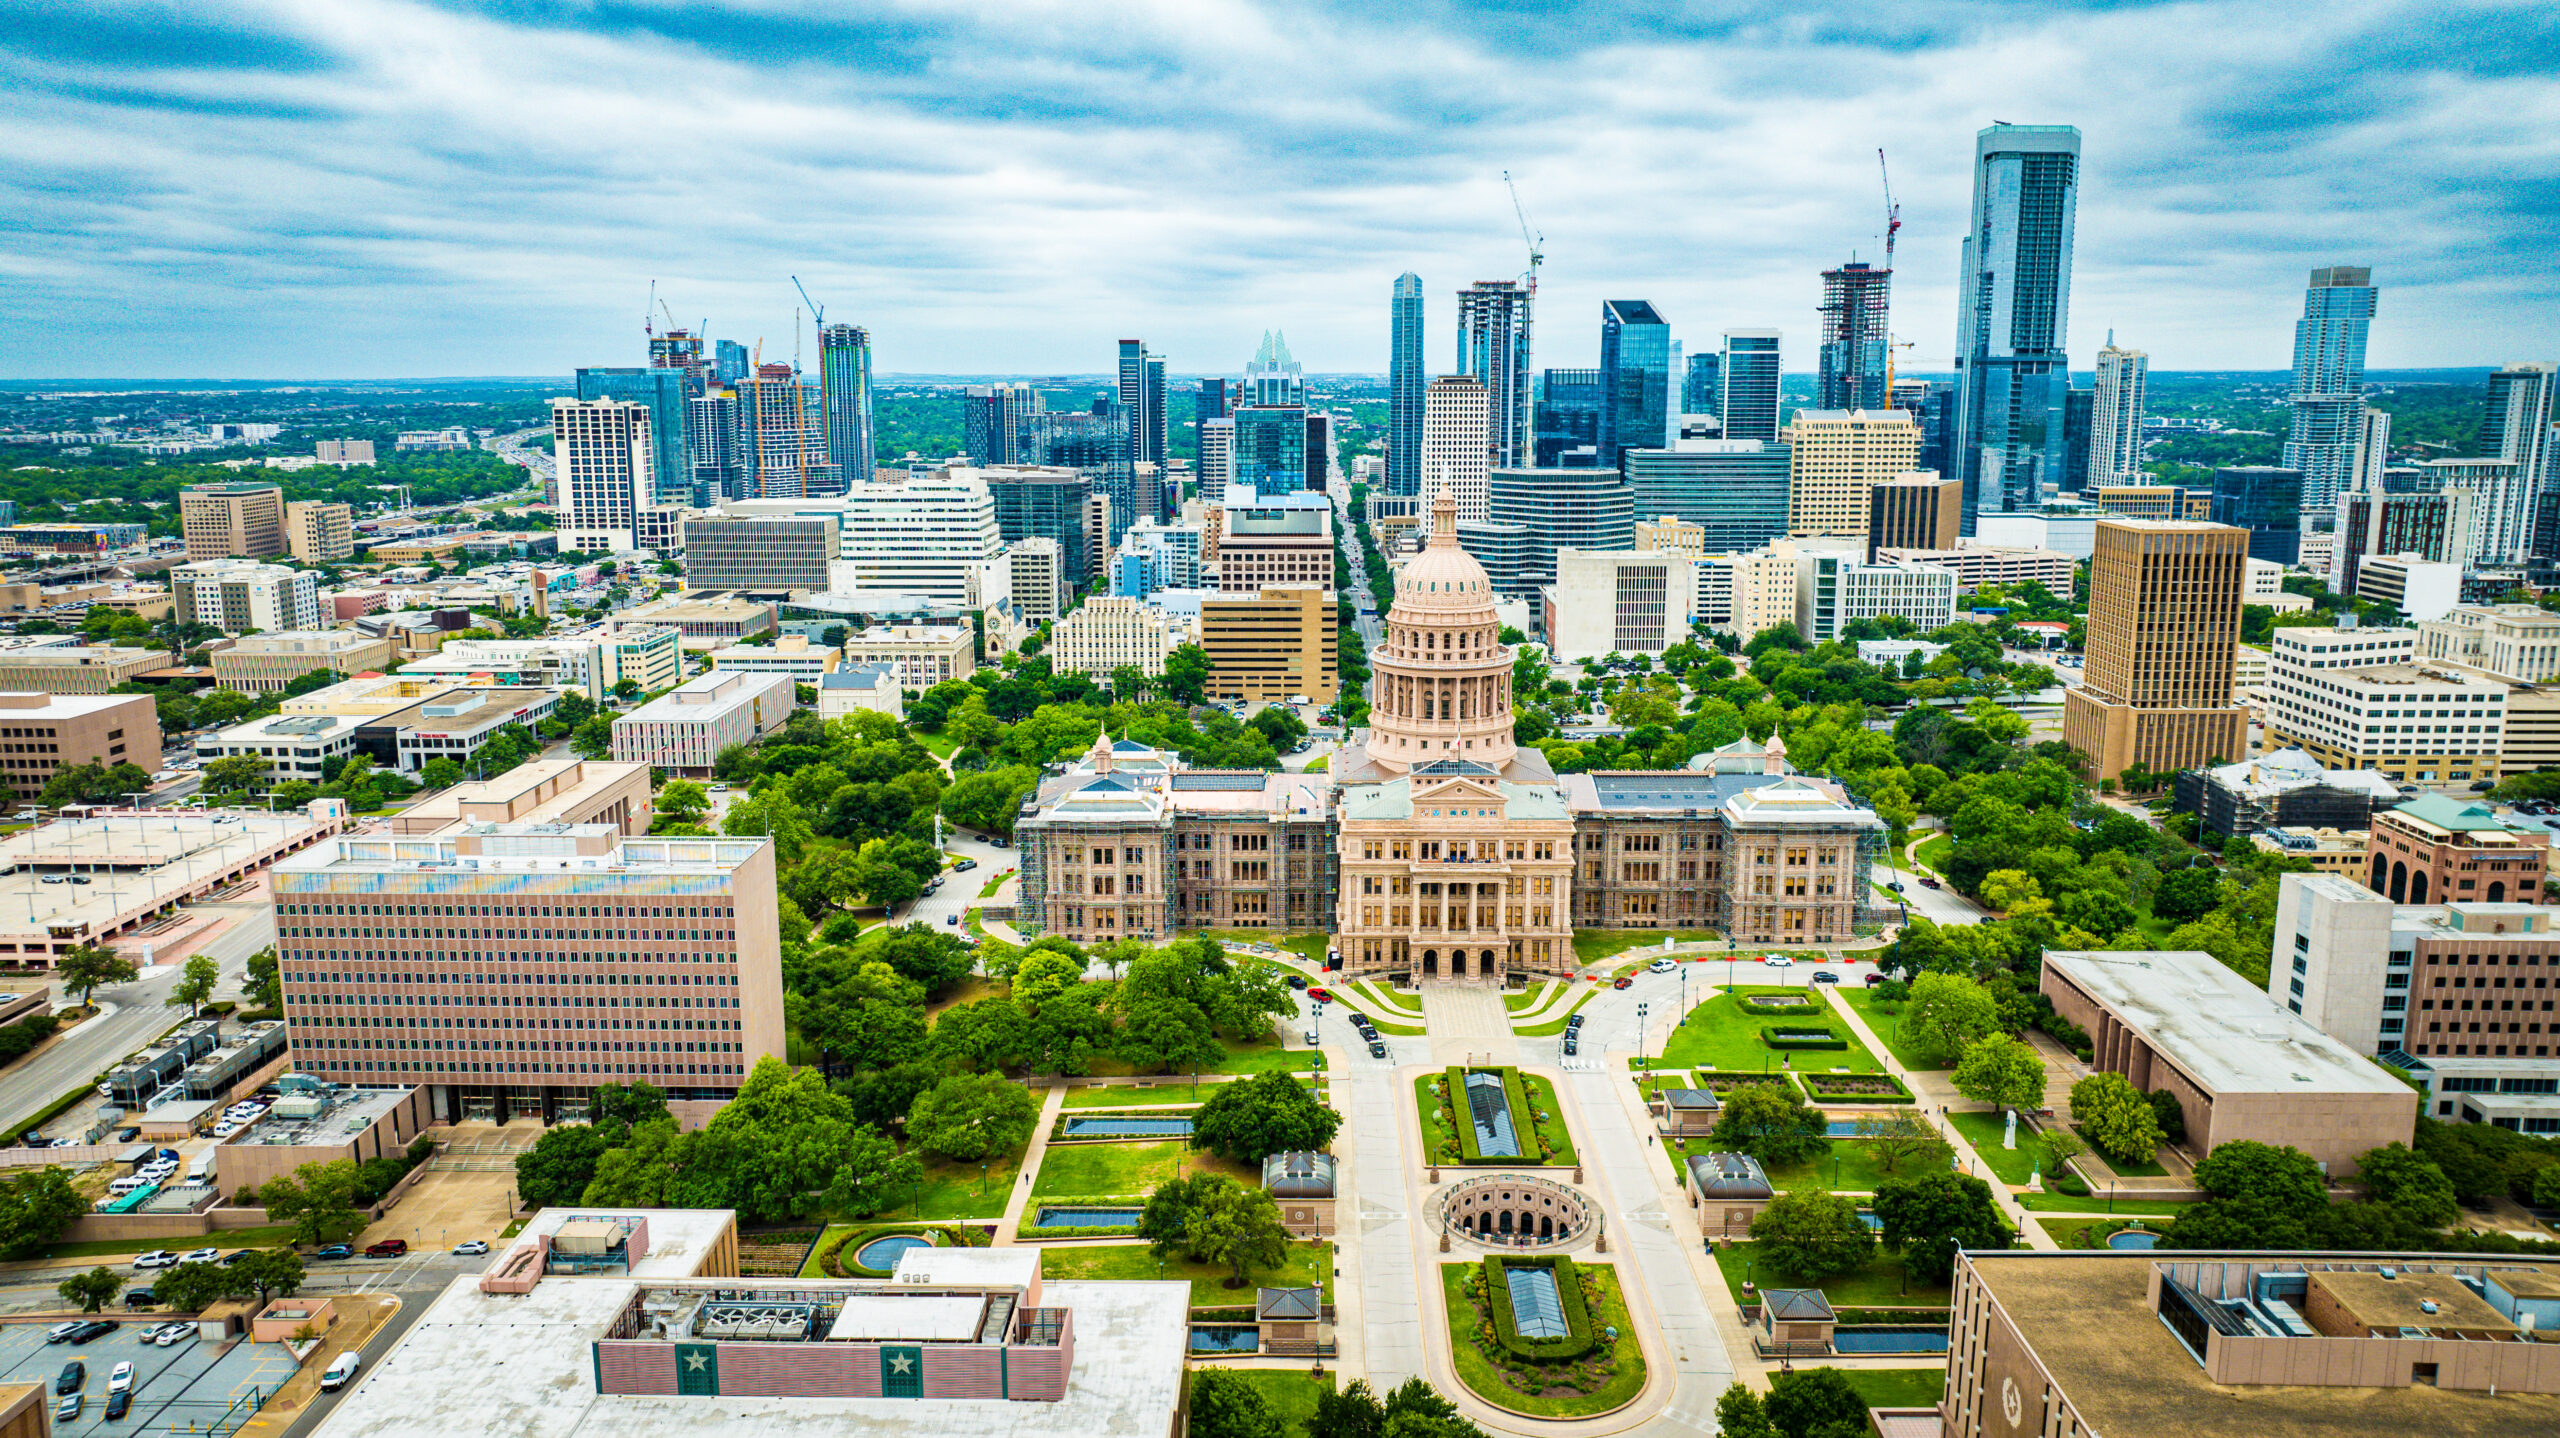 Bird's eye view of Texas Capitol building in Austin, TX.